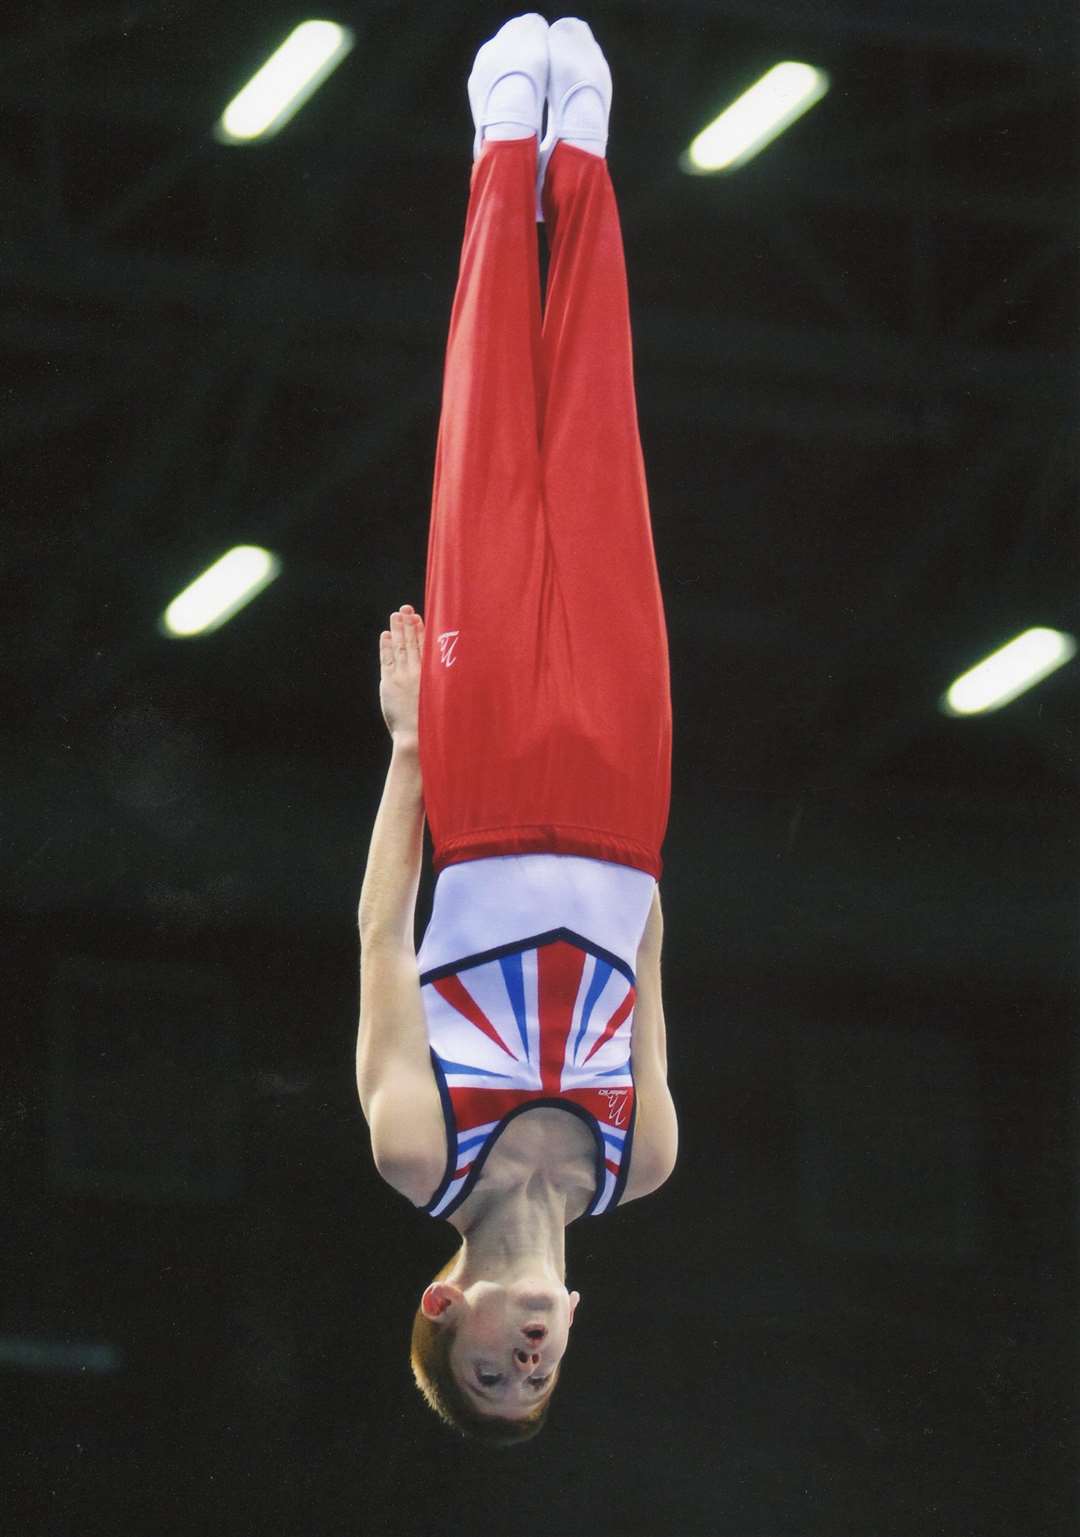 Peter Buravytskiy, trampoline gymnast from Gillingham